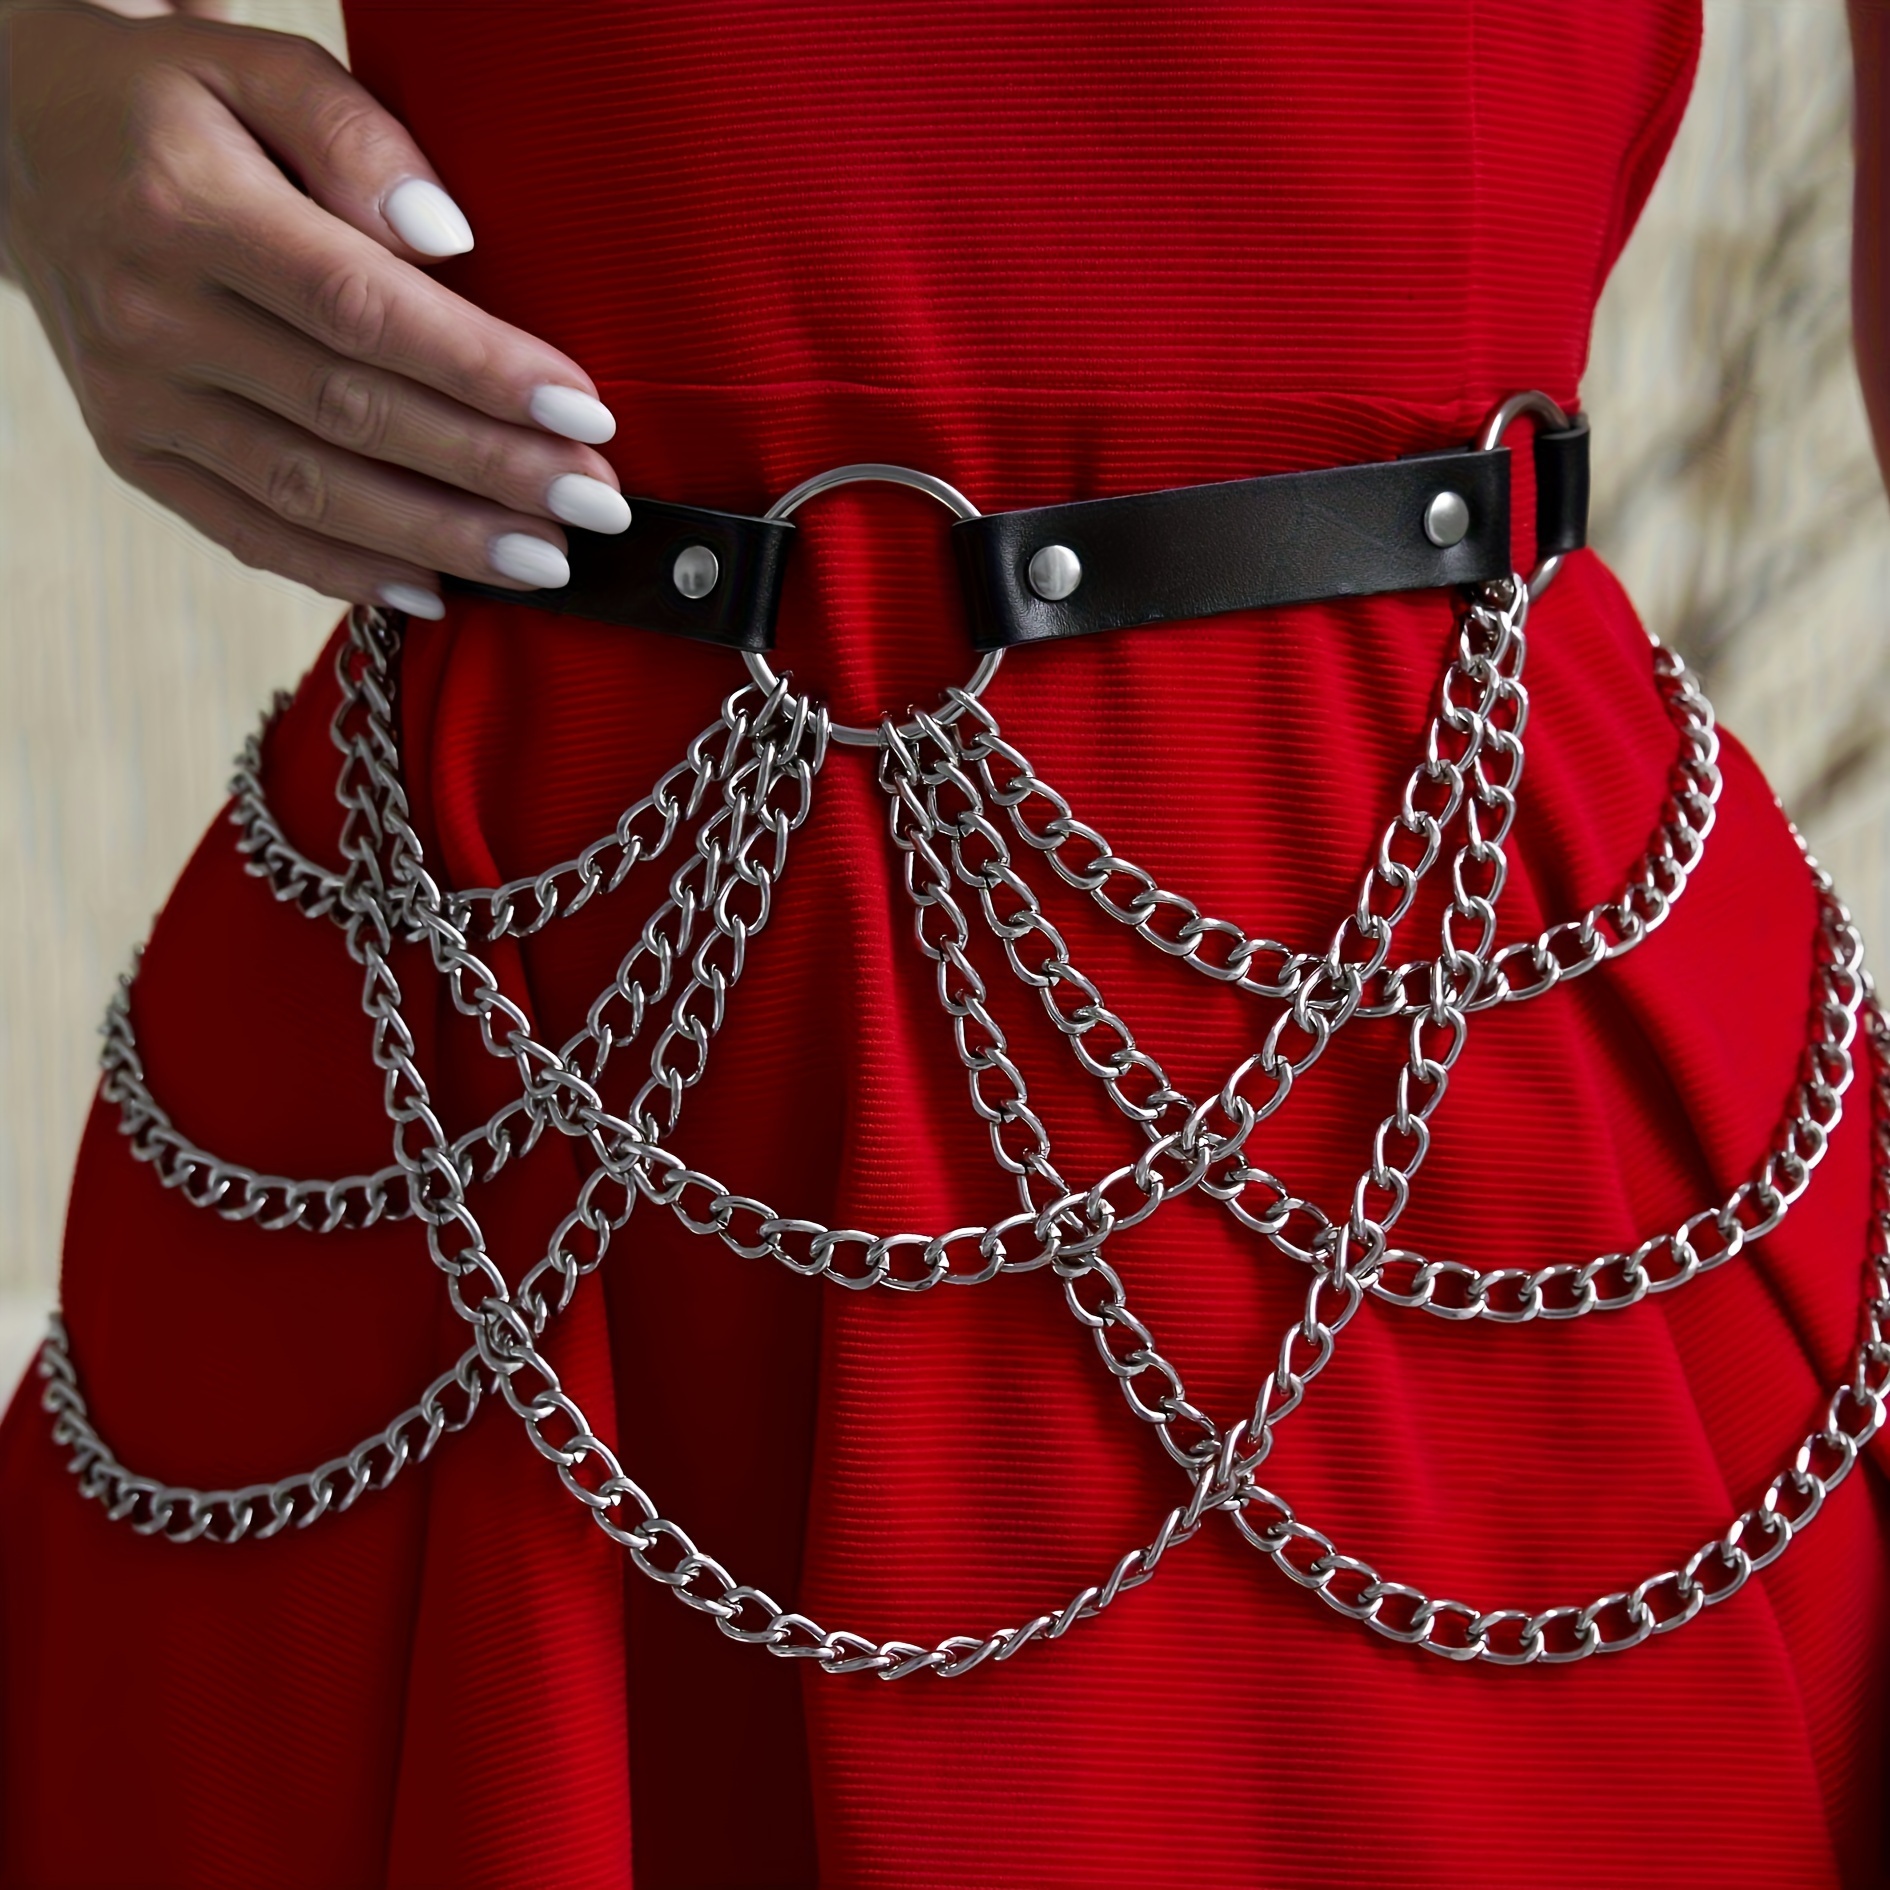 Bodiy Punk Waist Harness Belt Fashion Body Chain Black Goth Rave Adjustable  Body Jewelry for Women and Girls